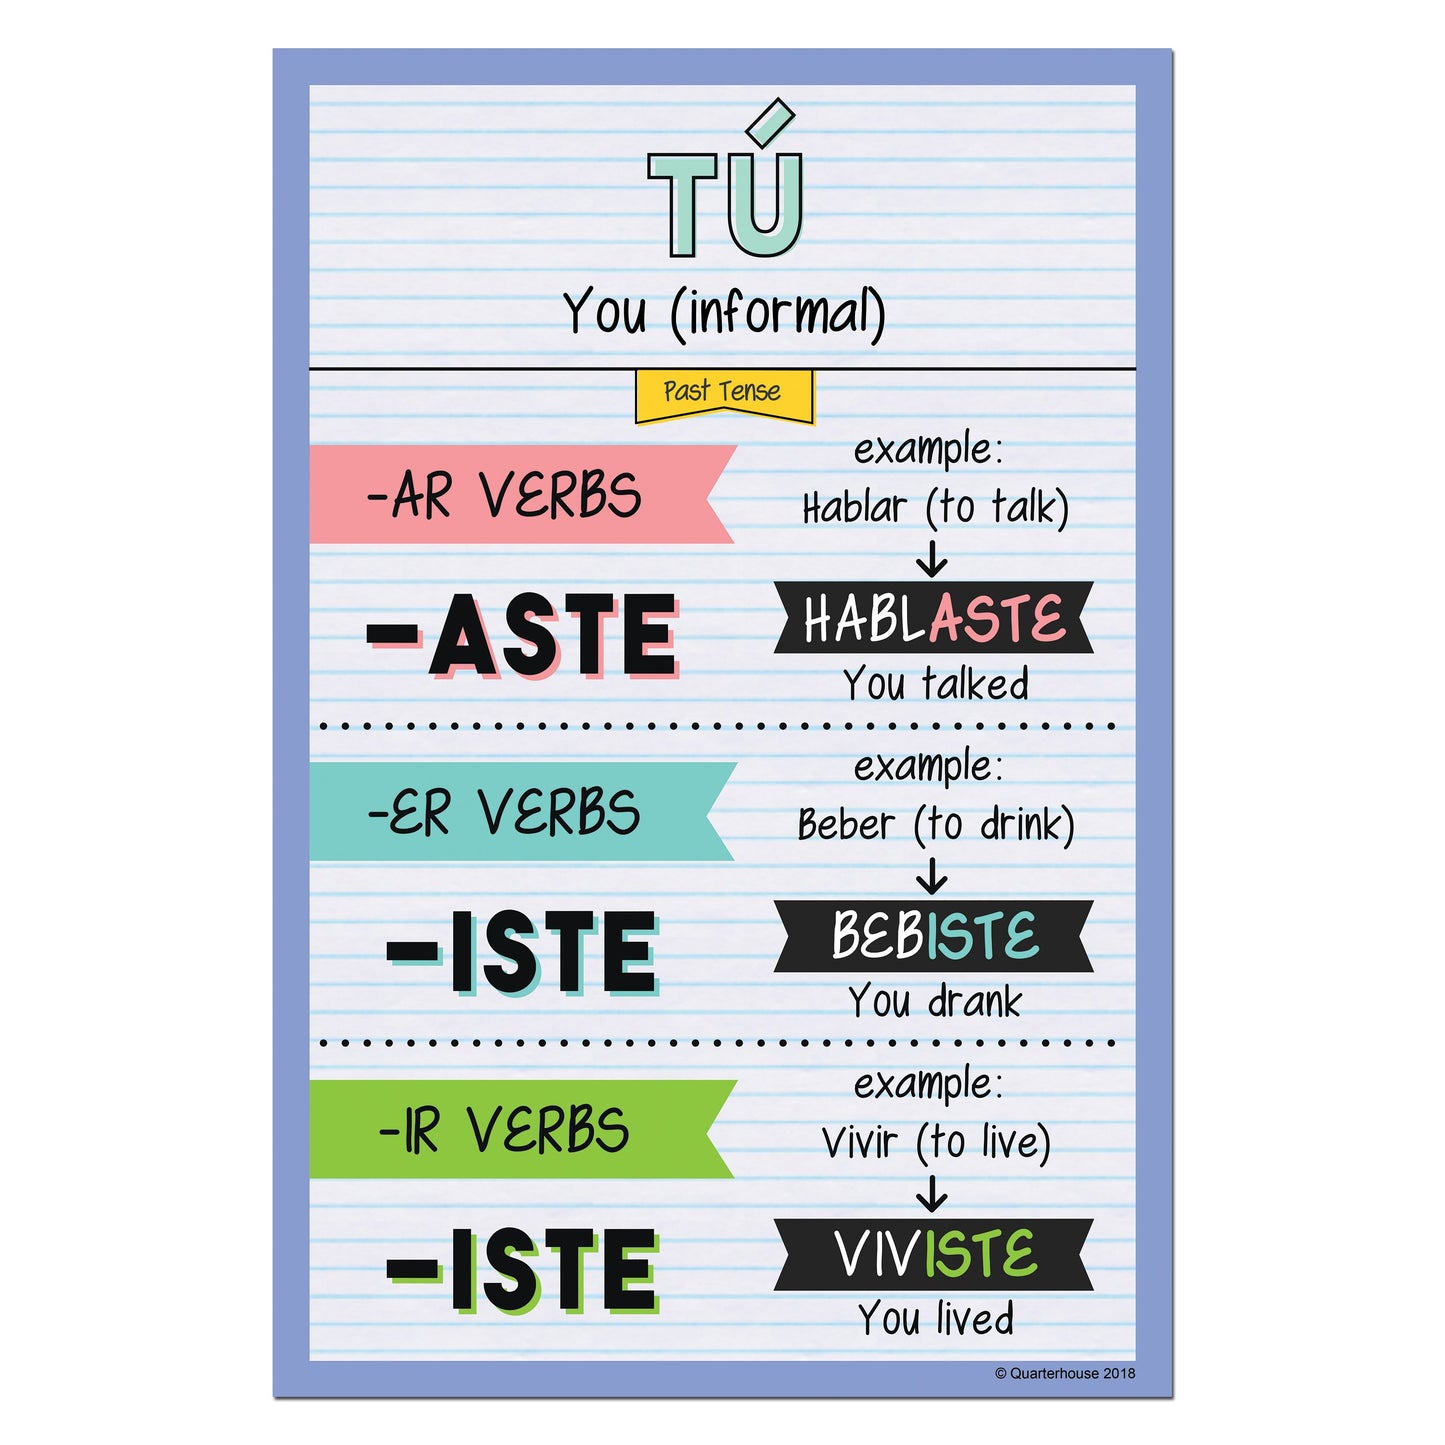 Quarterhouse Tú - Past Tense Spanish Verb Conjugation Poster, Spanish and ESL Classroom Materials for Teachers